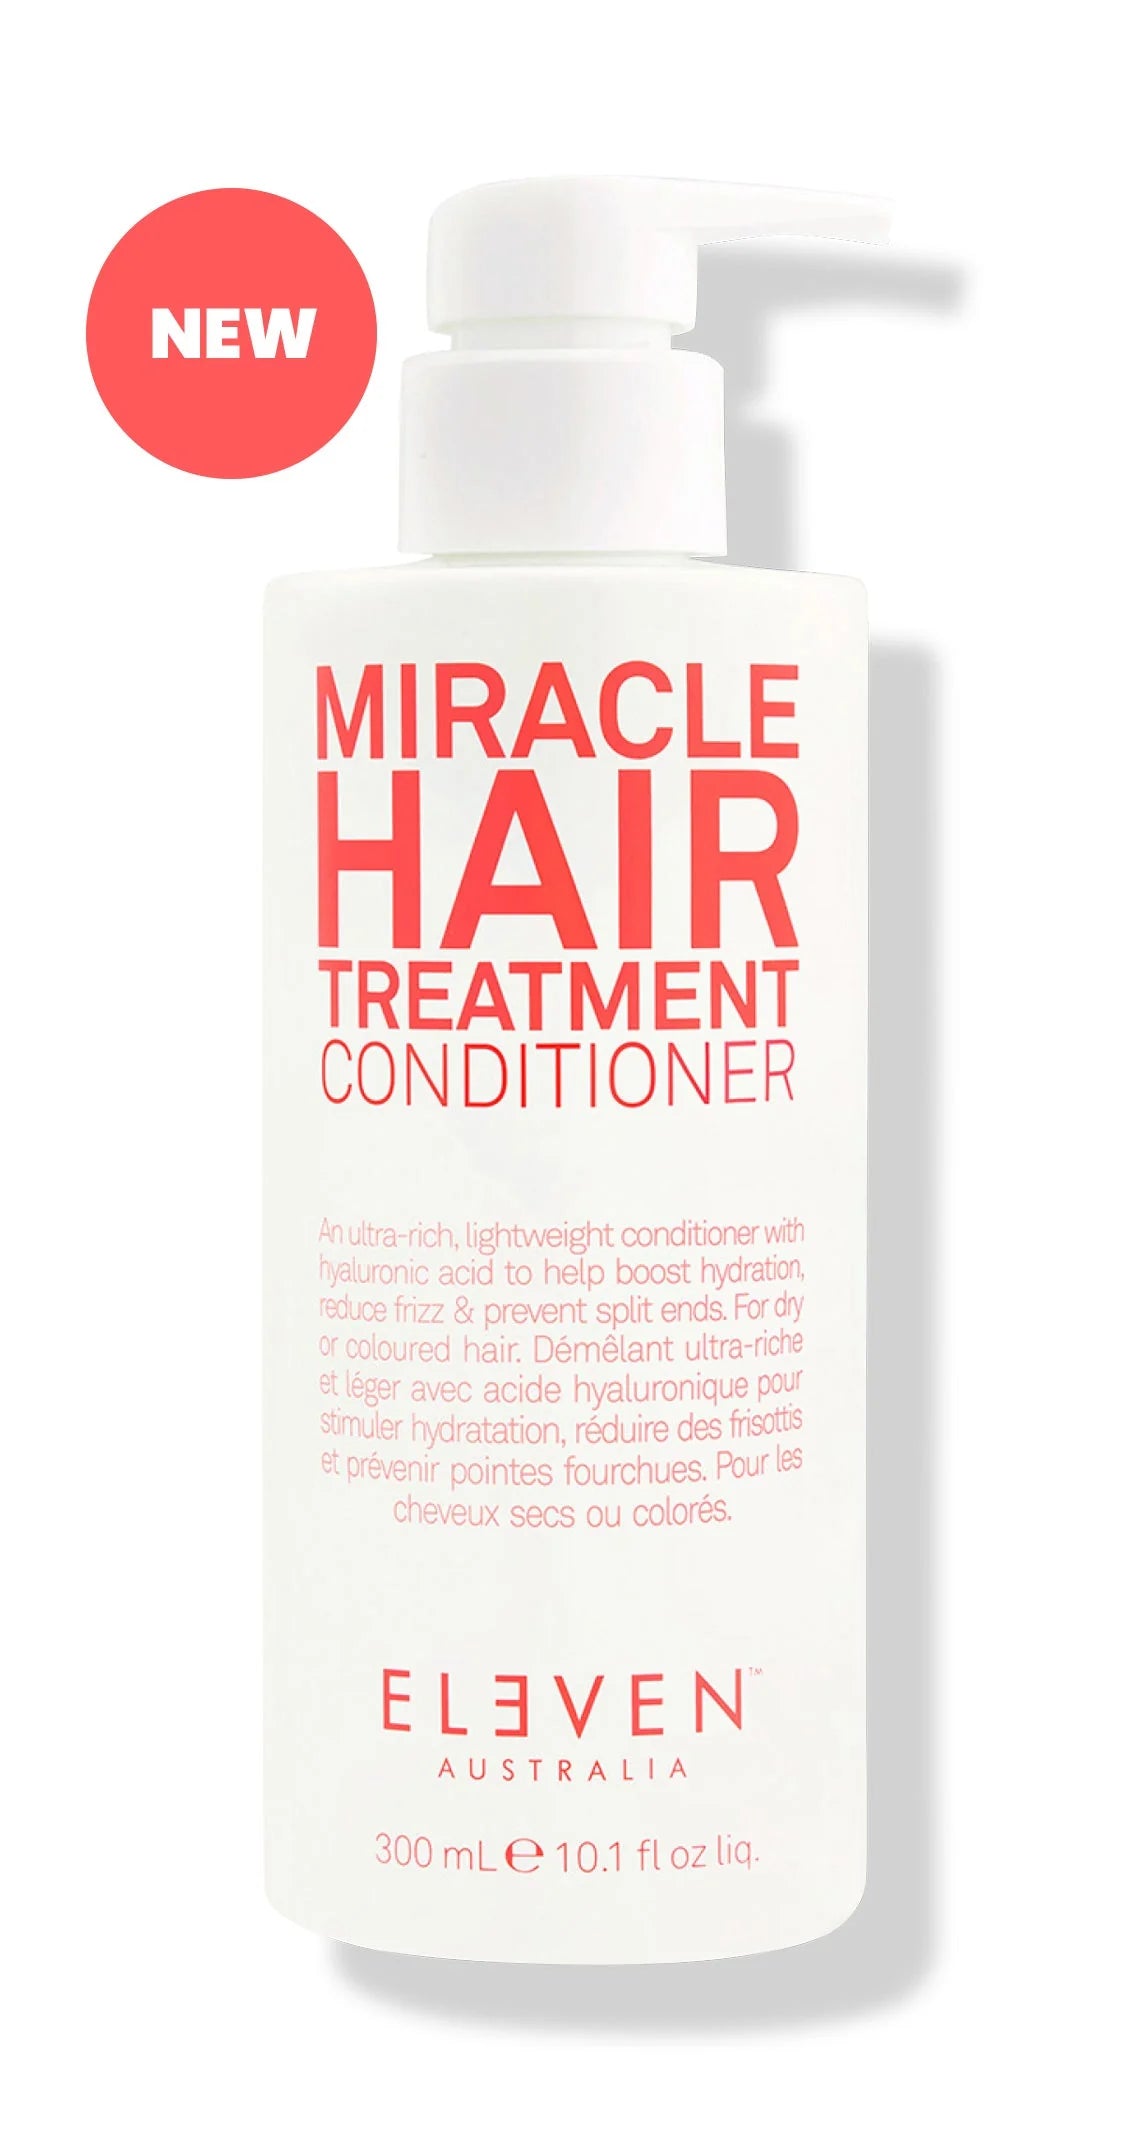 Miracle Hair Treatment Conditioner - 300ml - ELEVEN Australia